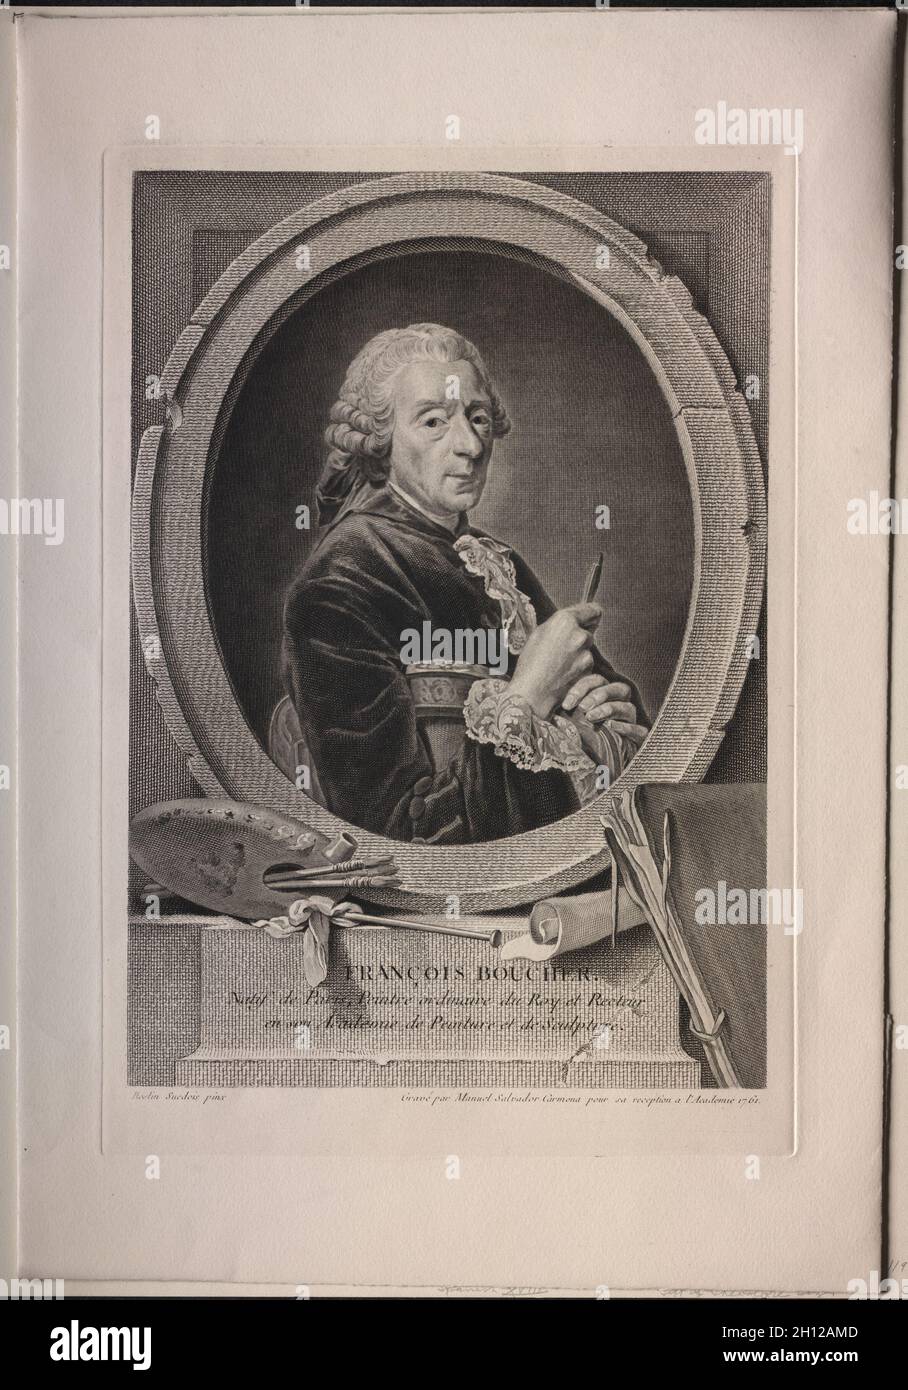 François Boucher, 1761. Manuel Salvador Carmona (Spanish, 1734-1820). Engraving; Stock Photo